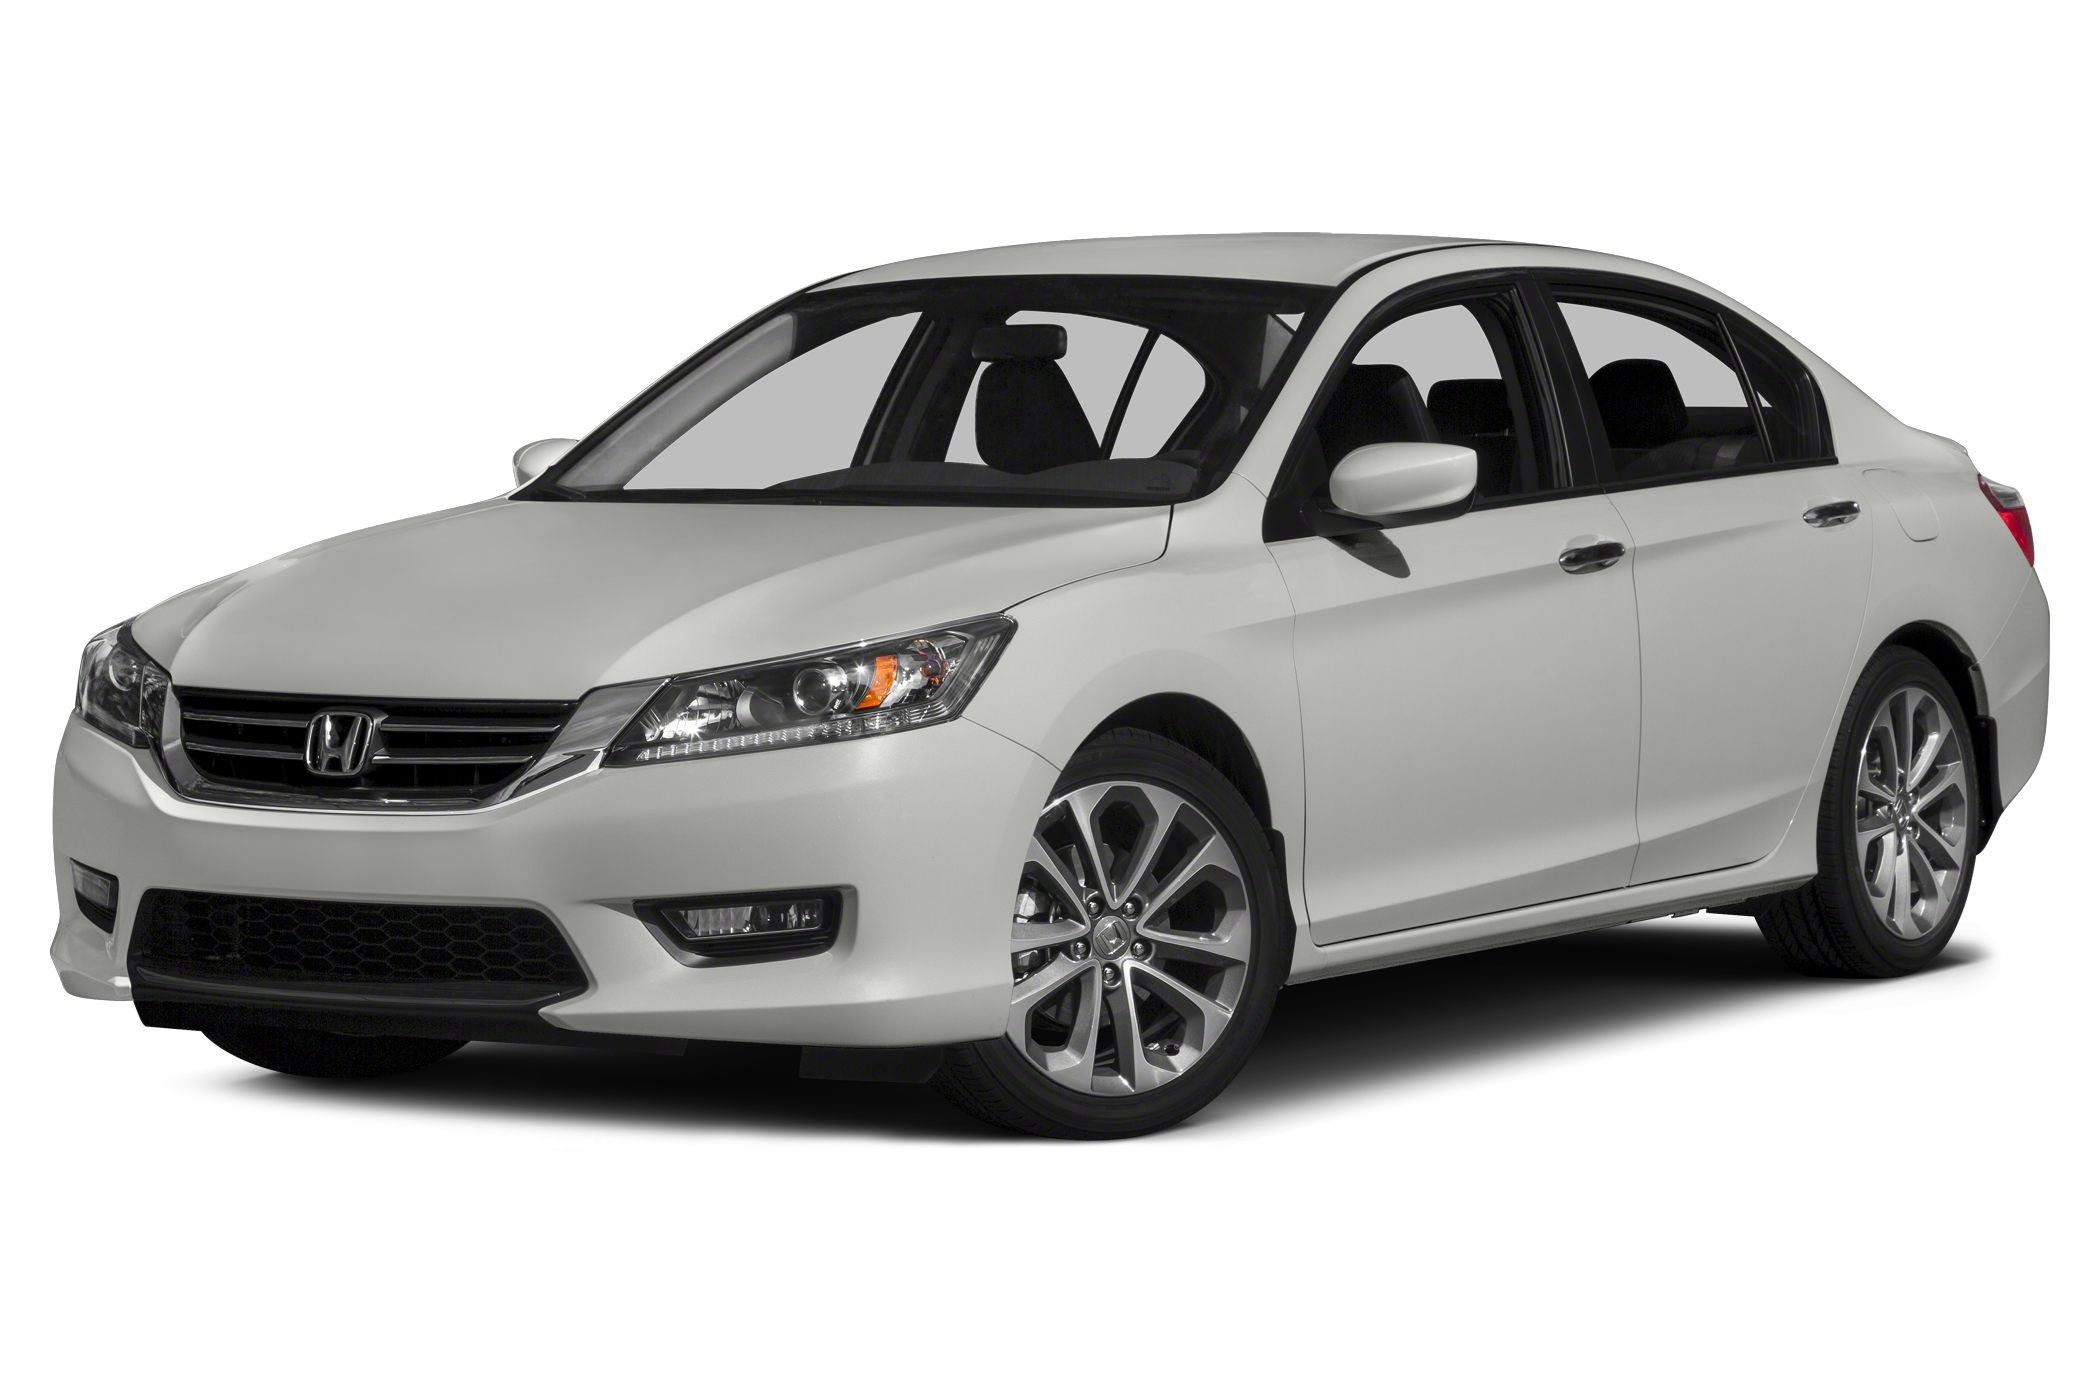 2015 honda accord sport 4dr sedan pricing and options honda accord invoice price 2015